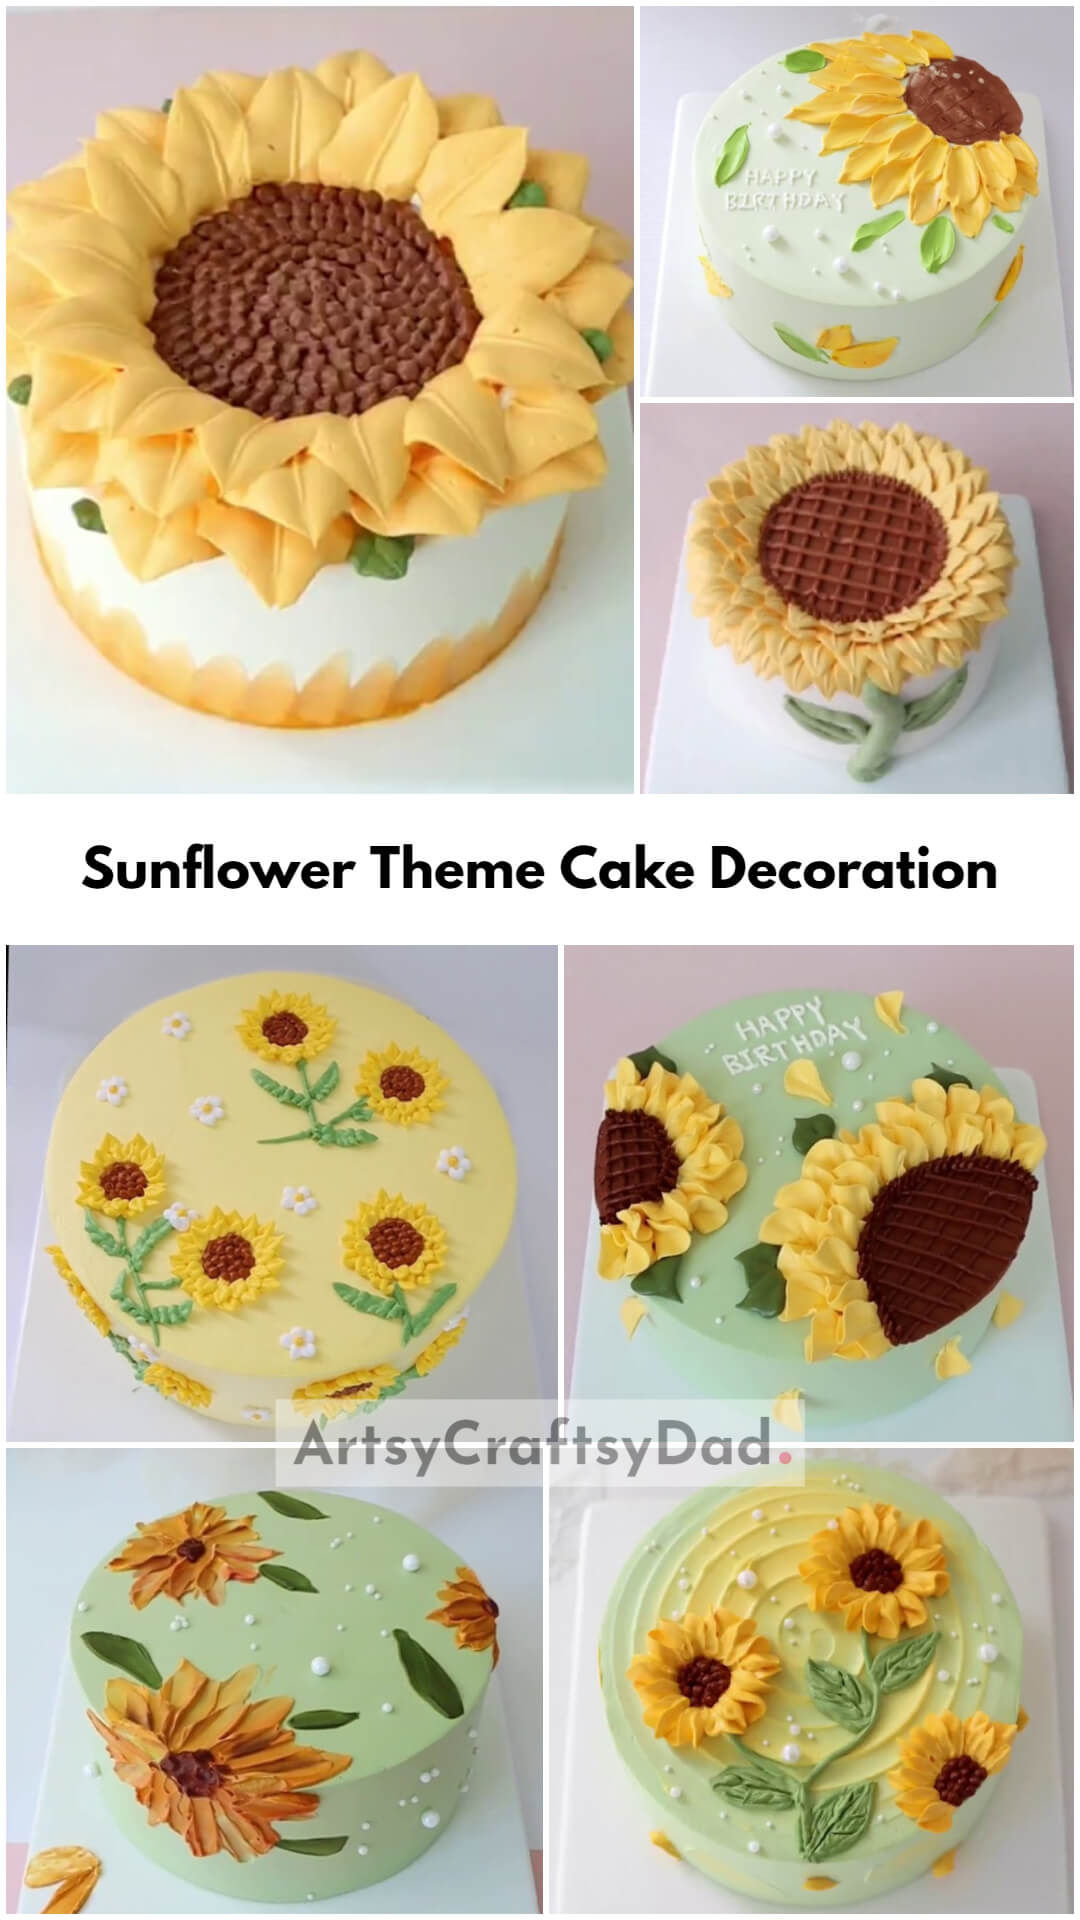 Sunflower Theme Cake Decoration Ideas